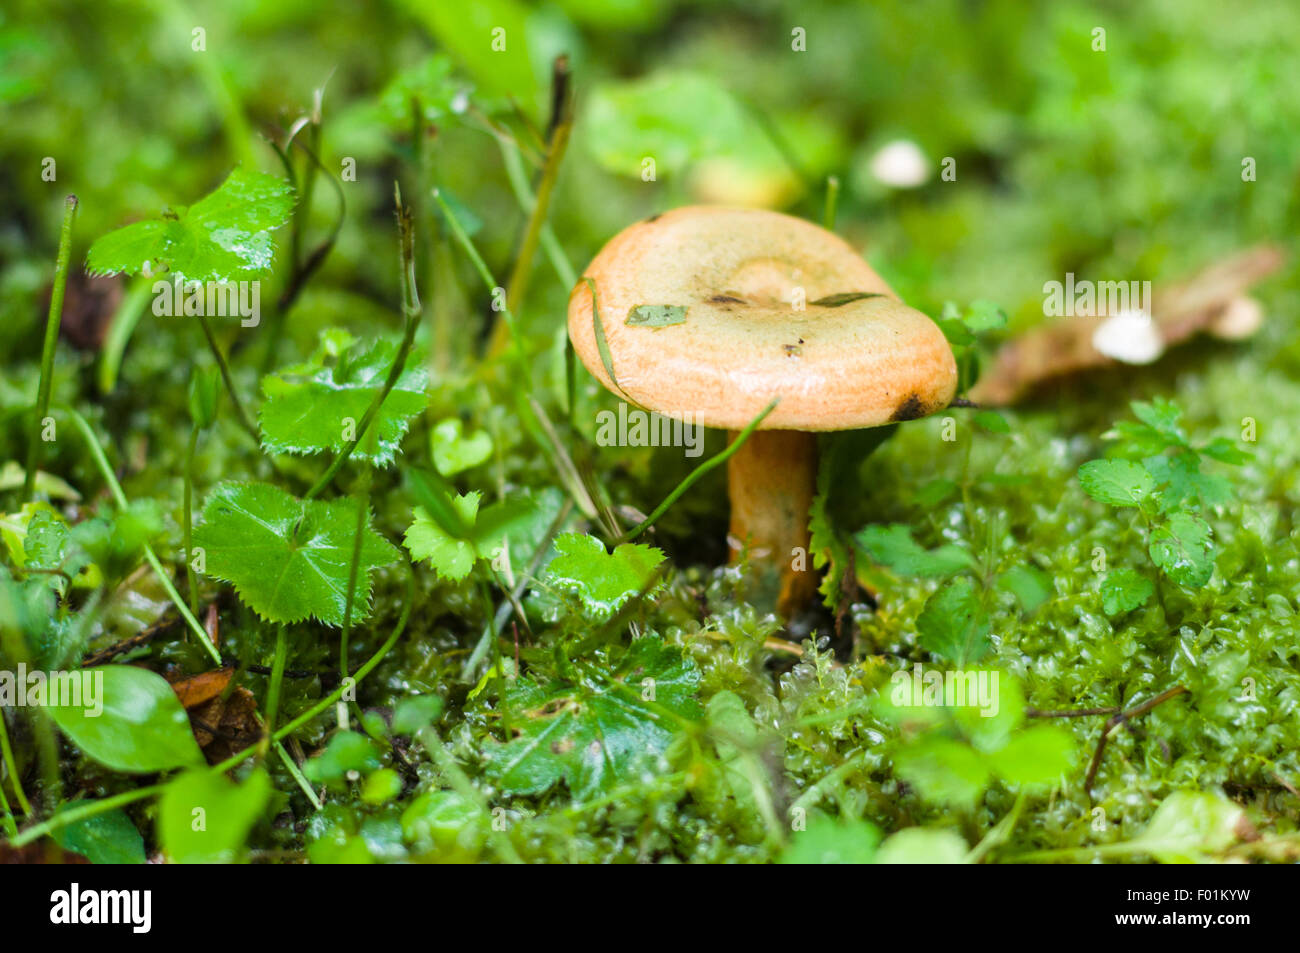 Lactarius deliciosus or saffron milk cap mushroom, narrow depth closeup view after rain Stock Photo